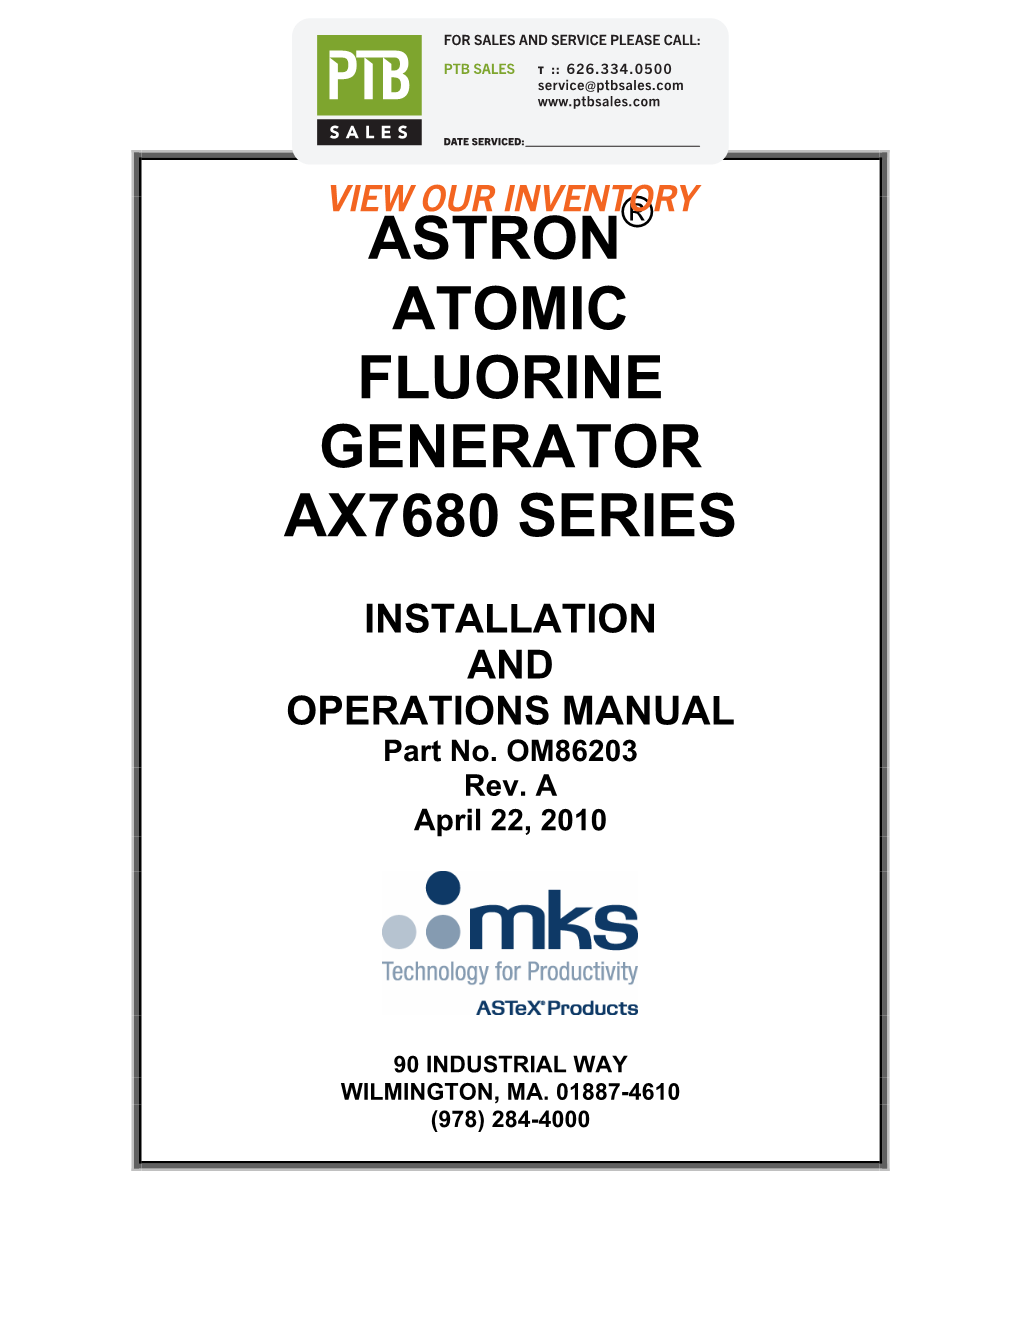 Astron Atomic Fluorine Generator Ax7680 Series